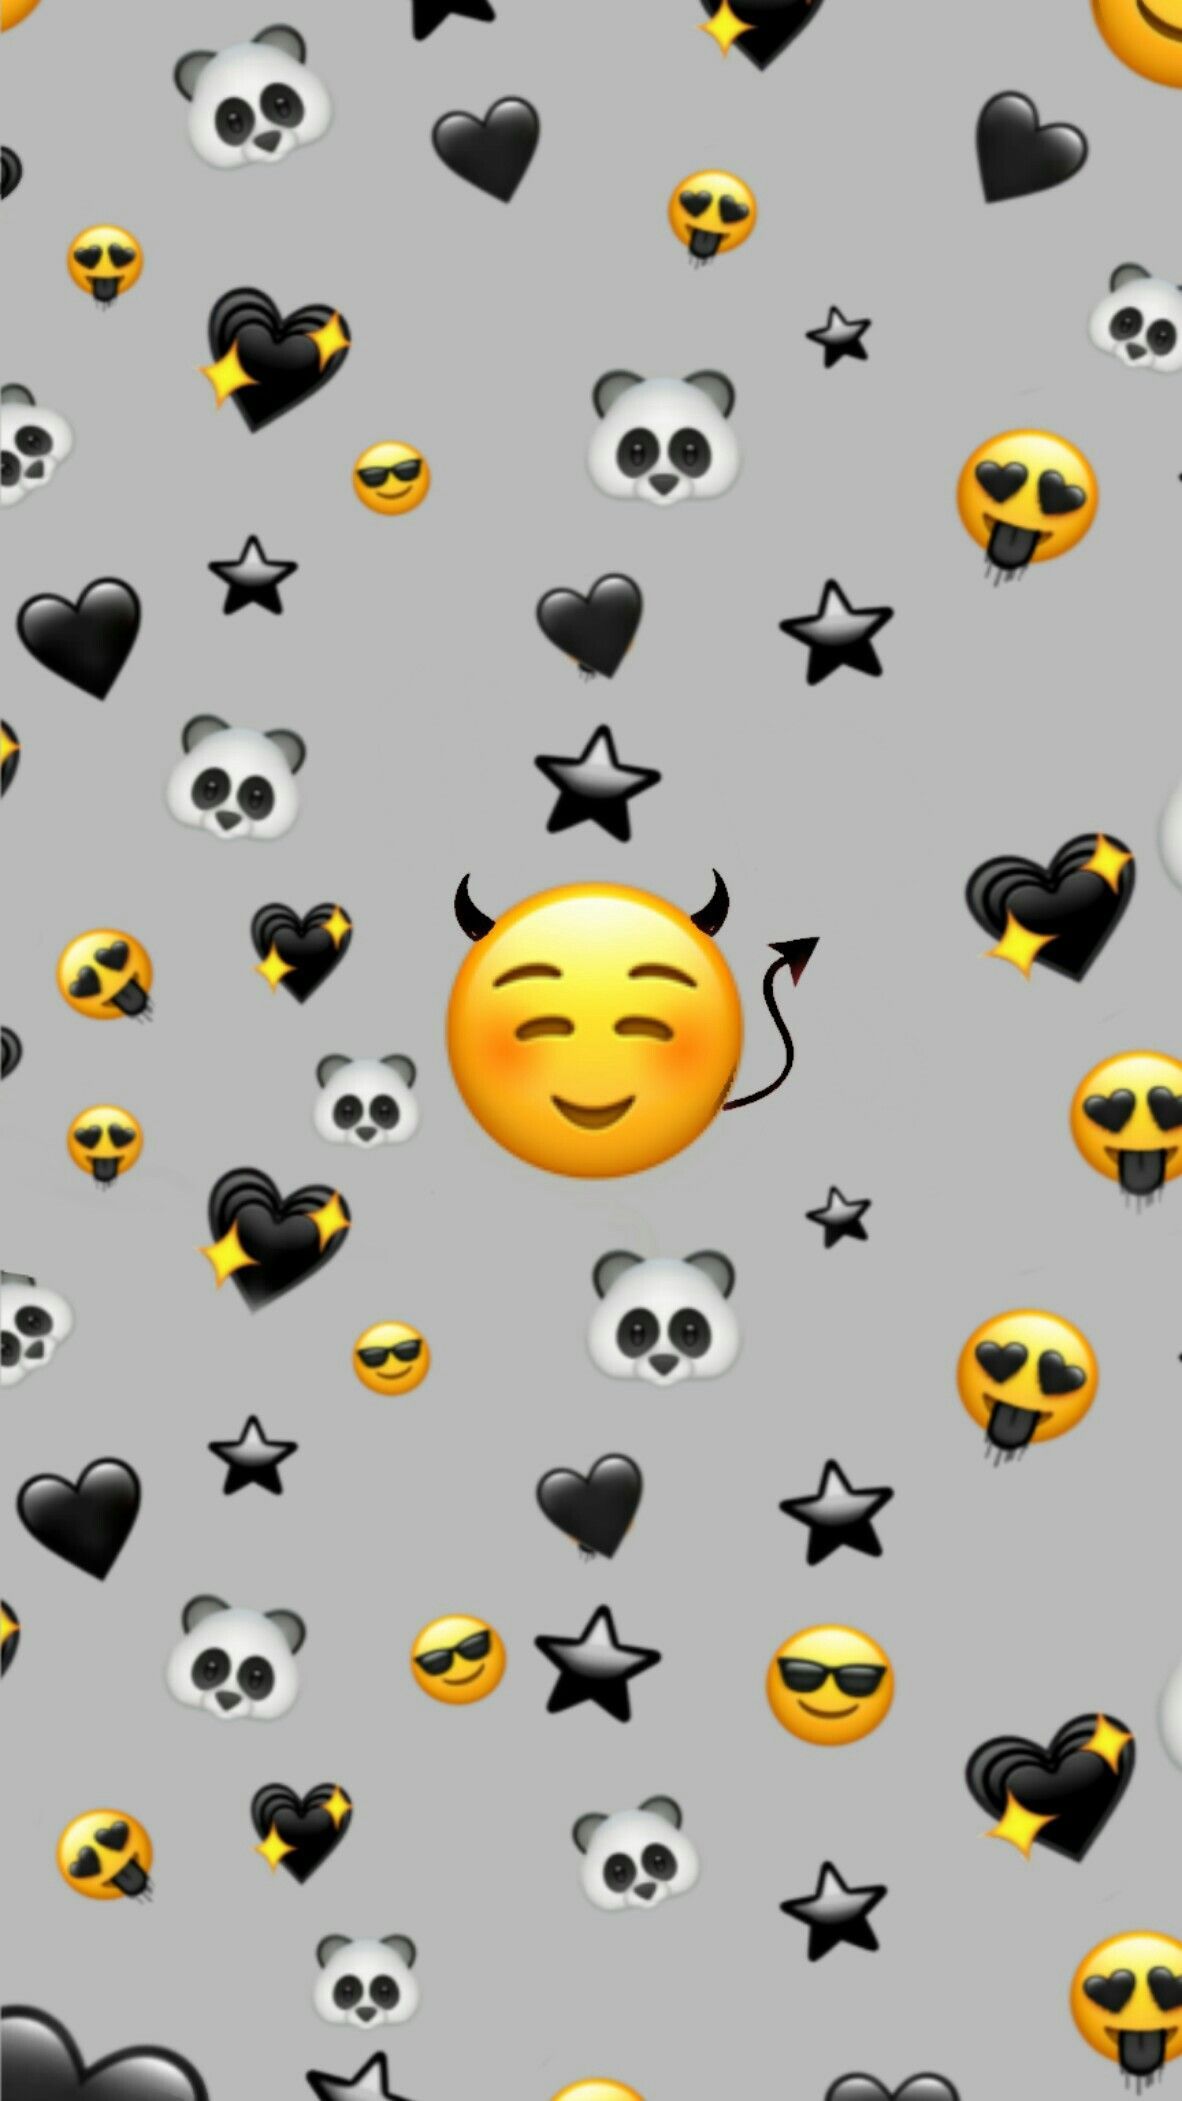 IPhone wallpaper of emojis including a devil emoji, panda - Emoji